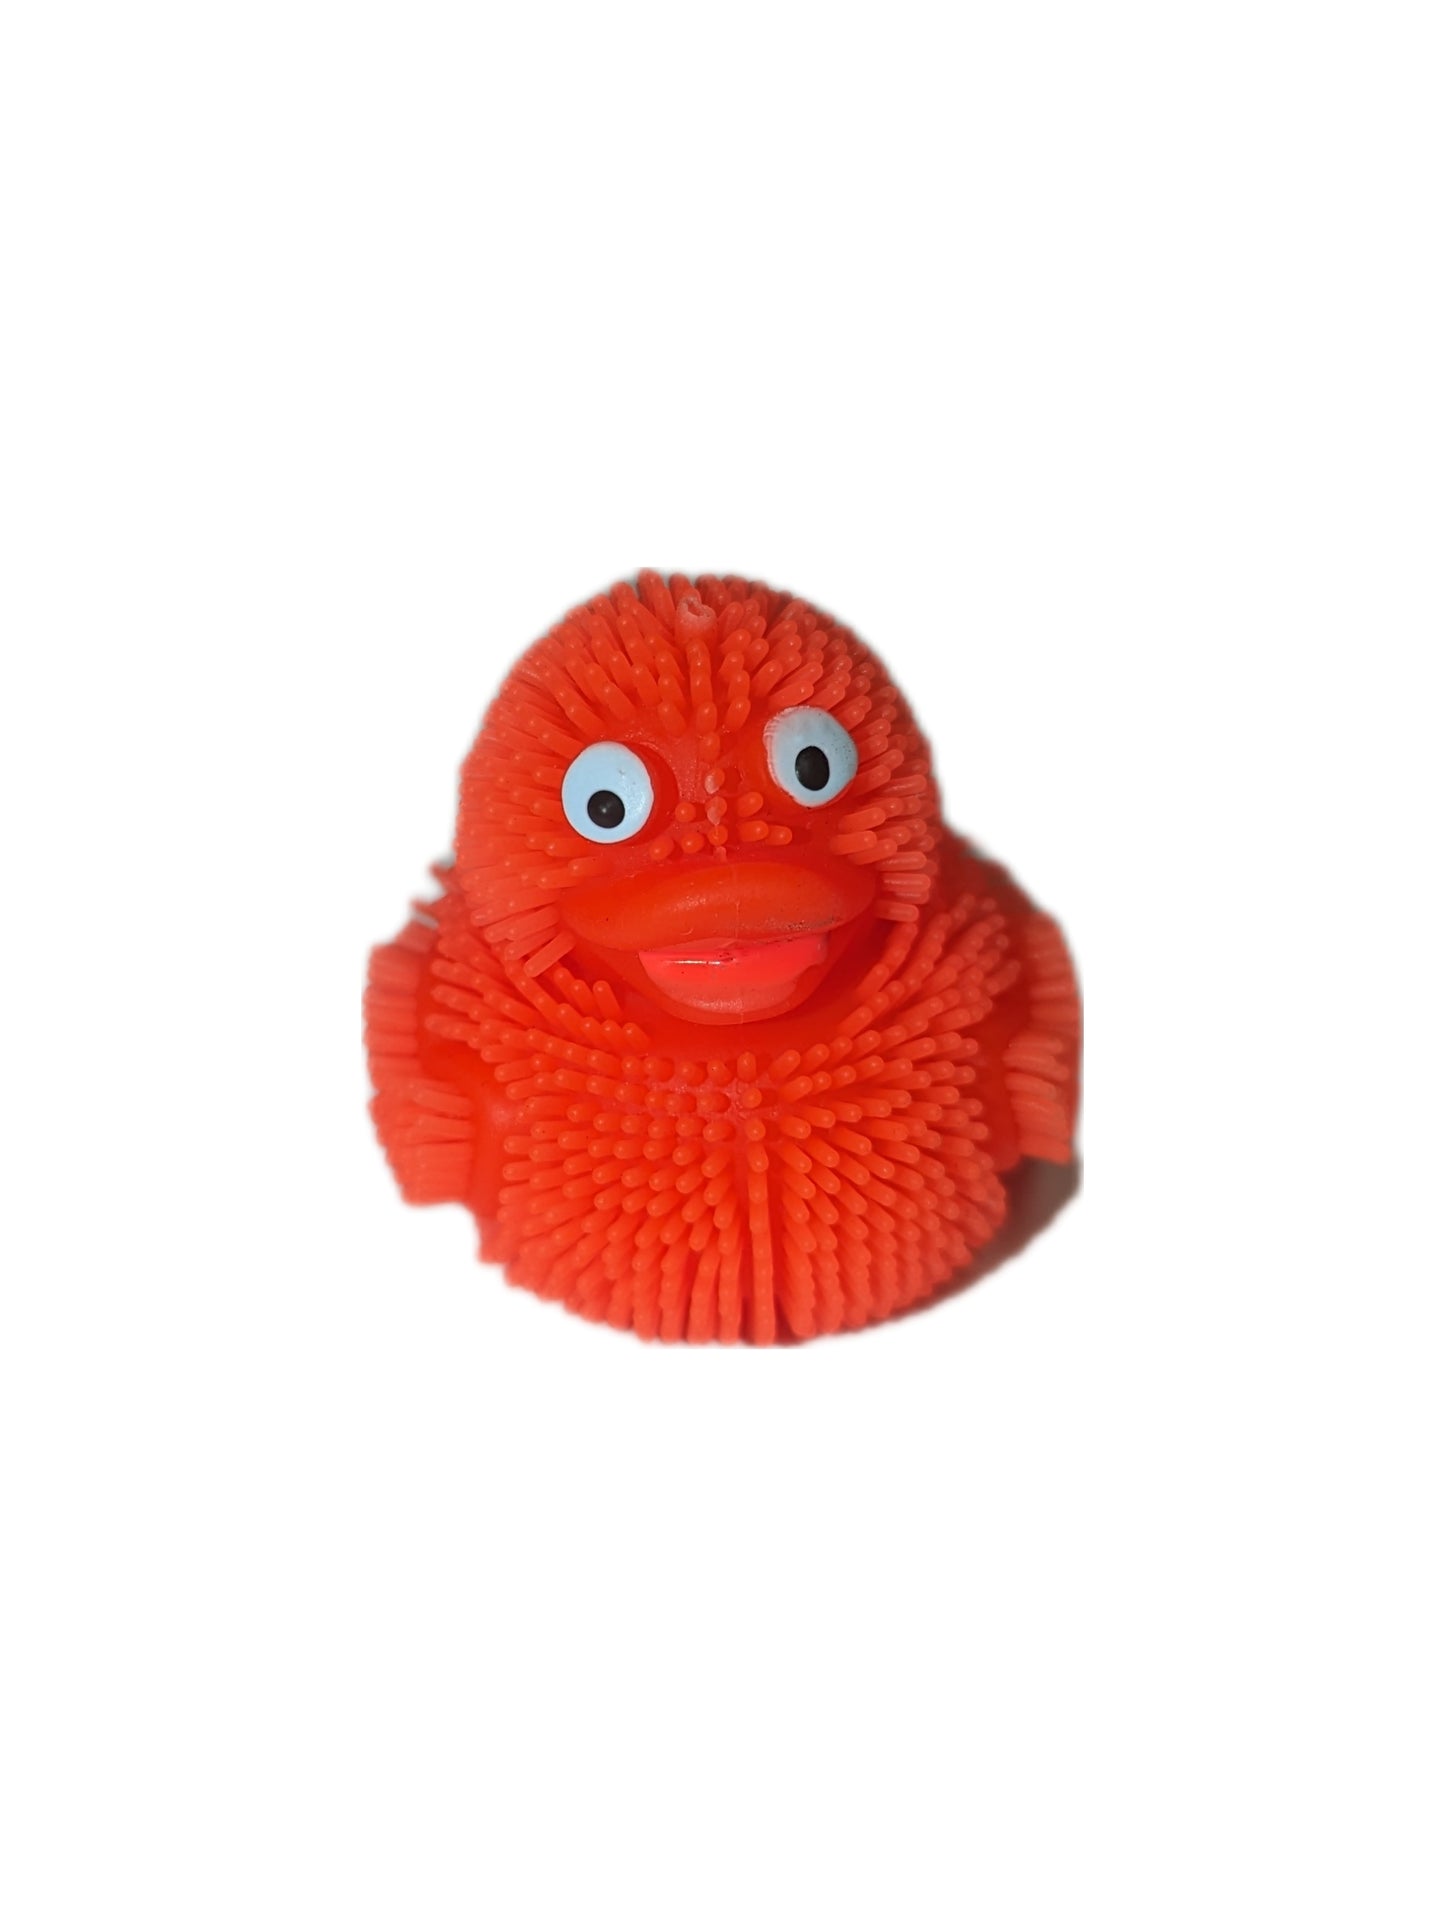 10 Orange Squishy Ducks - 2" Rubber Ducks